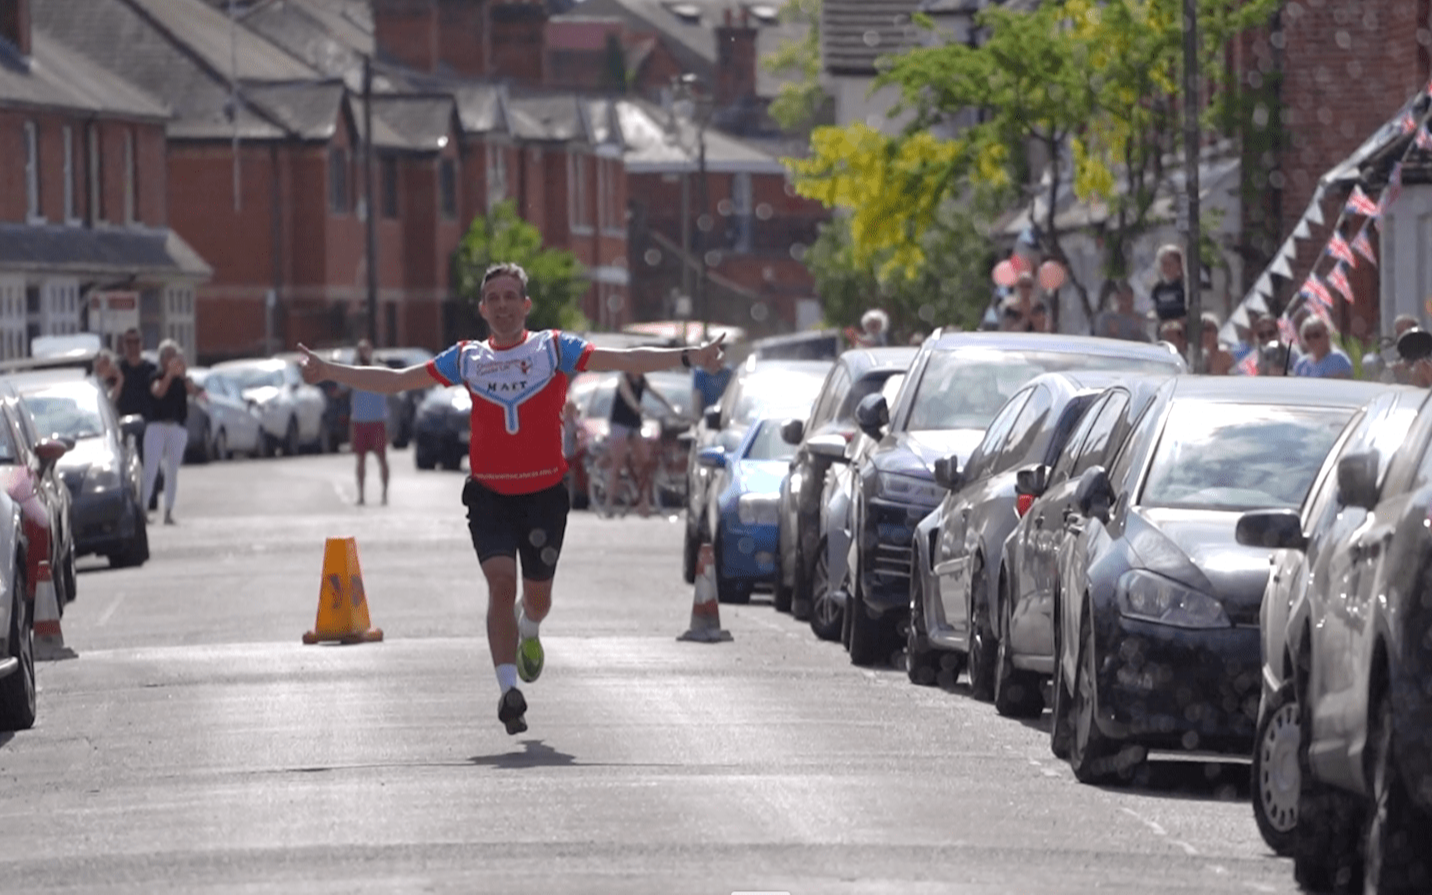 A marathon runner runs towards the camera with arms raised